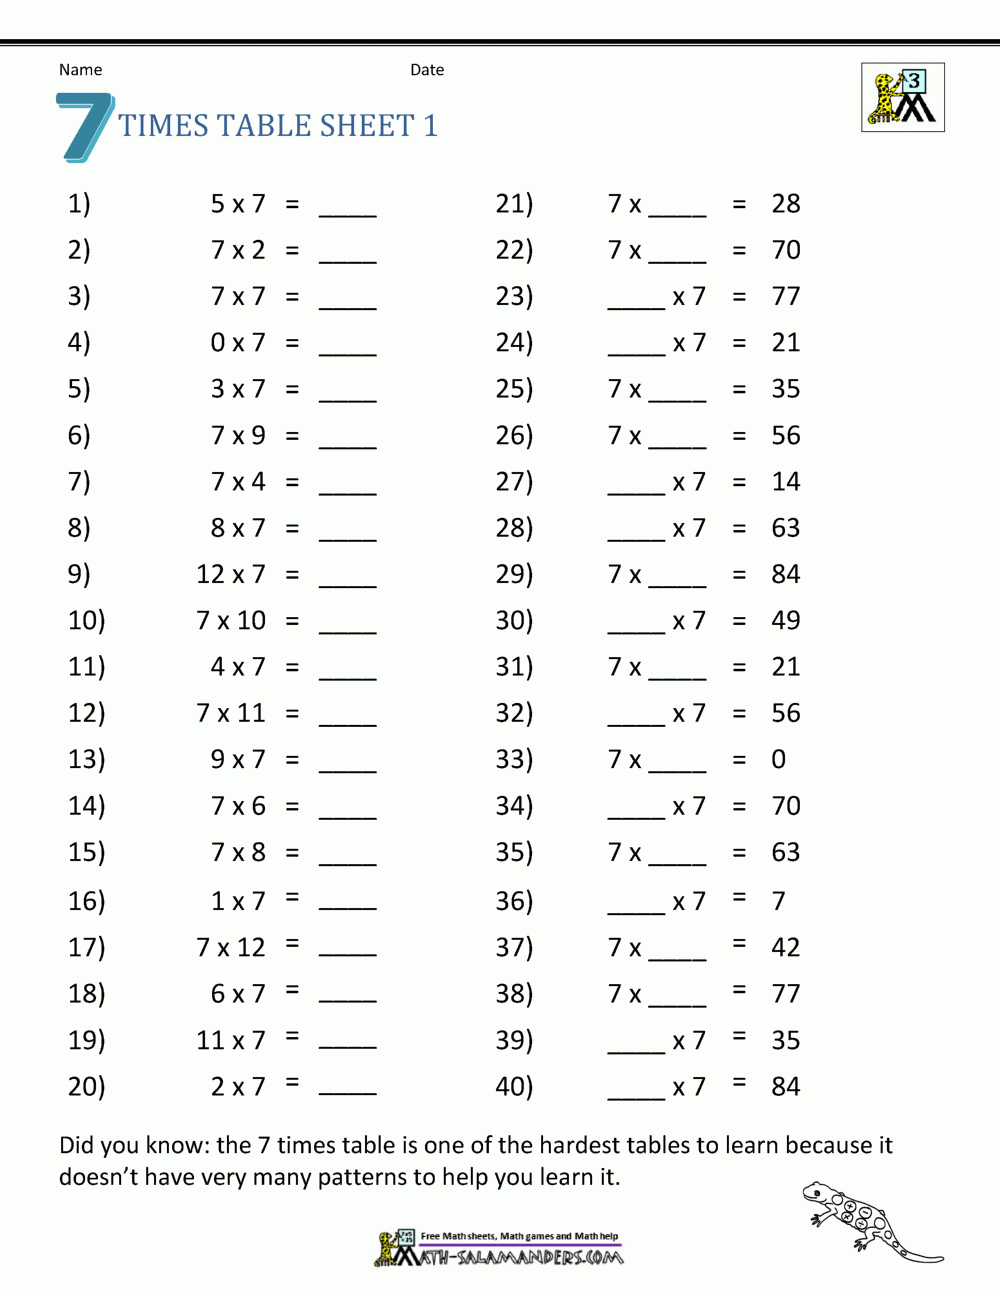 Multiplication Drill Sheets 3Rd Grade pertaining to Printable Multiplication Drills